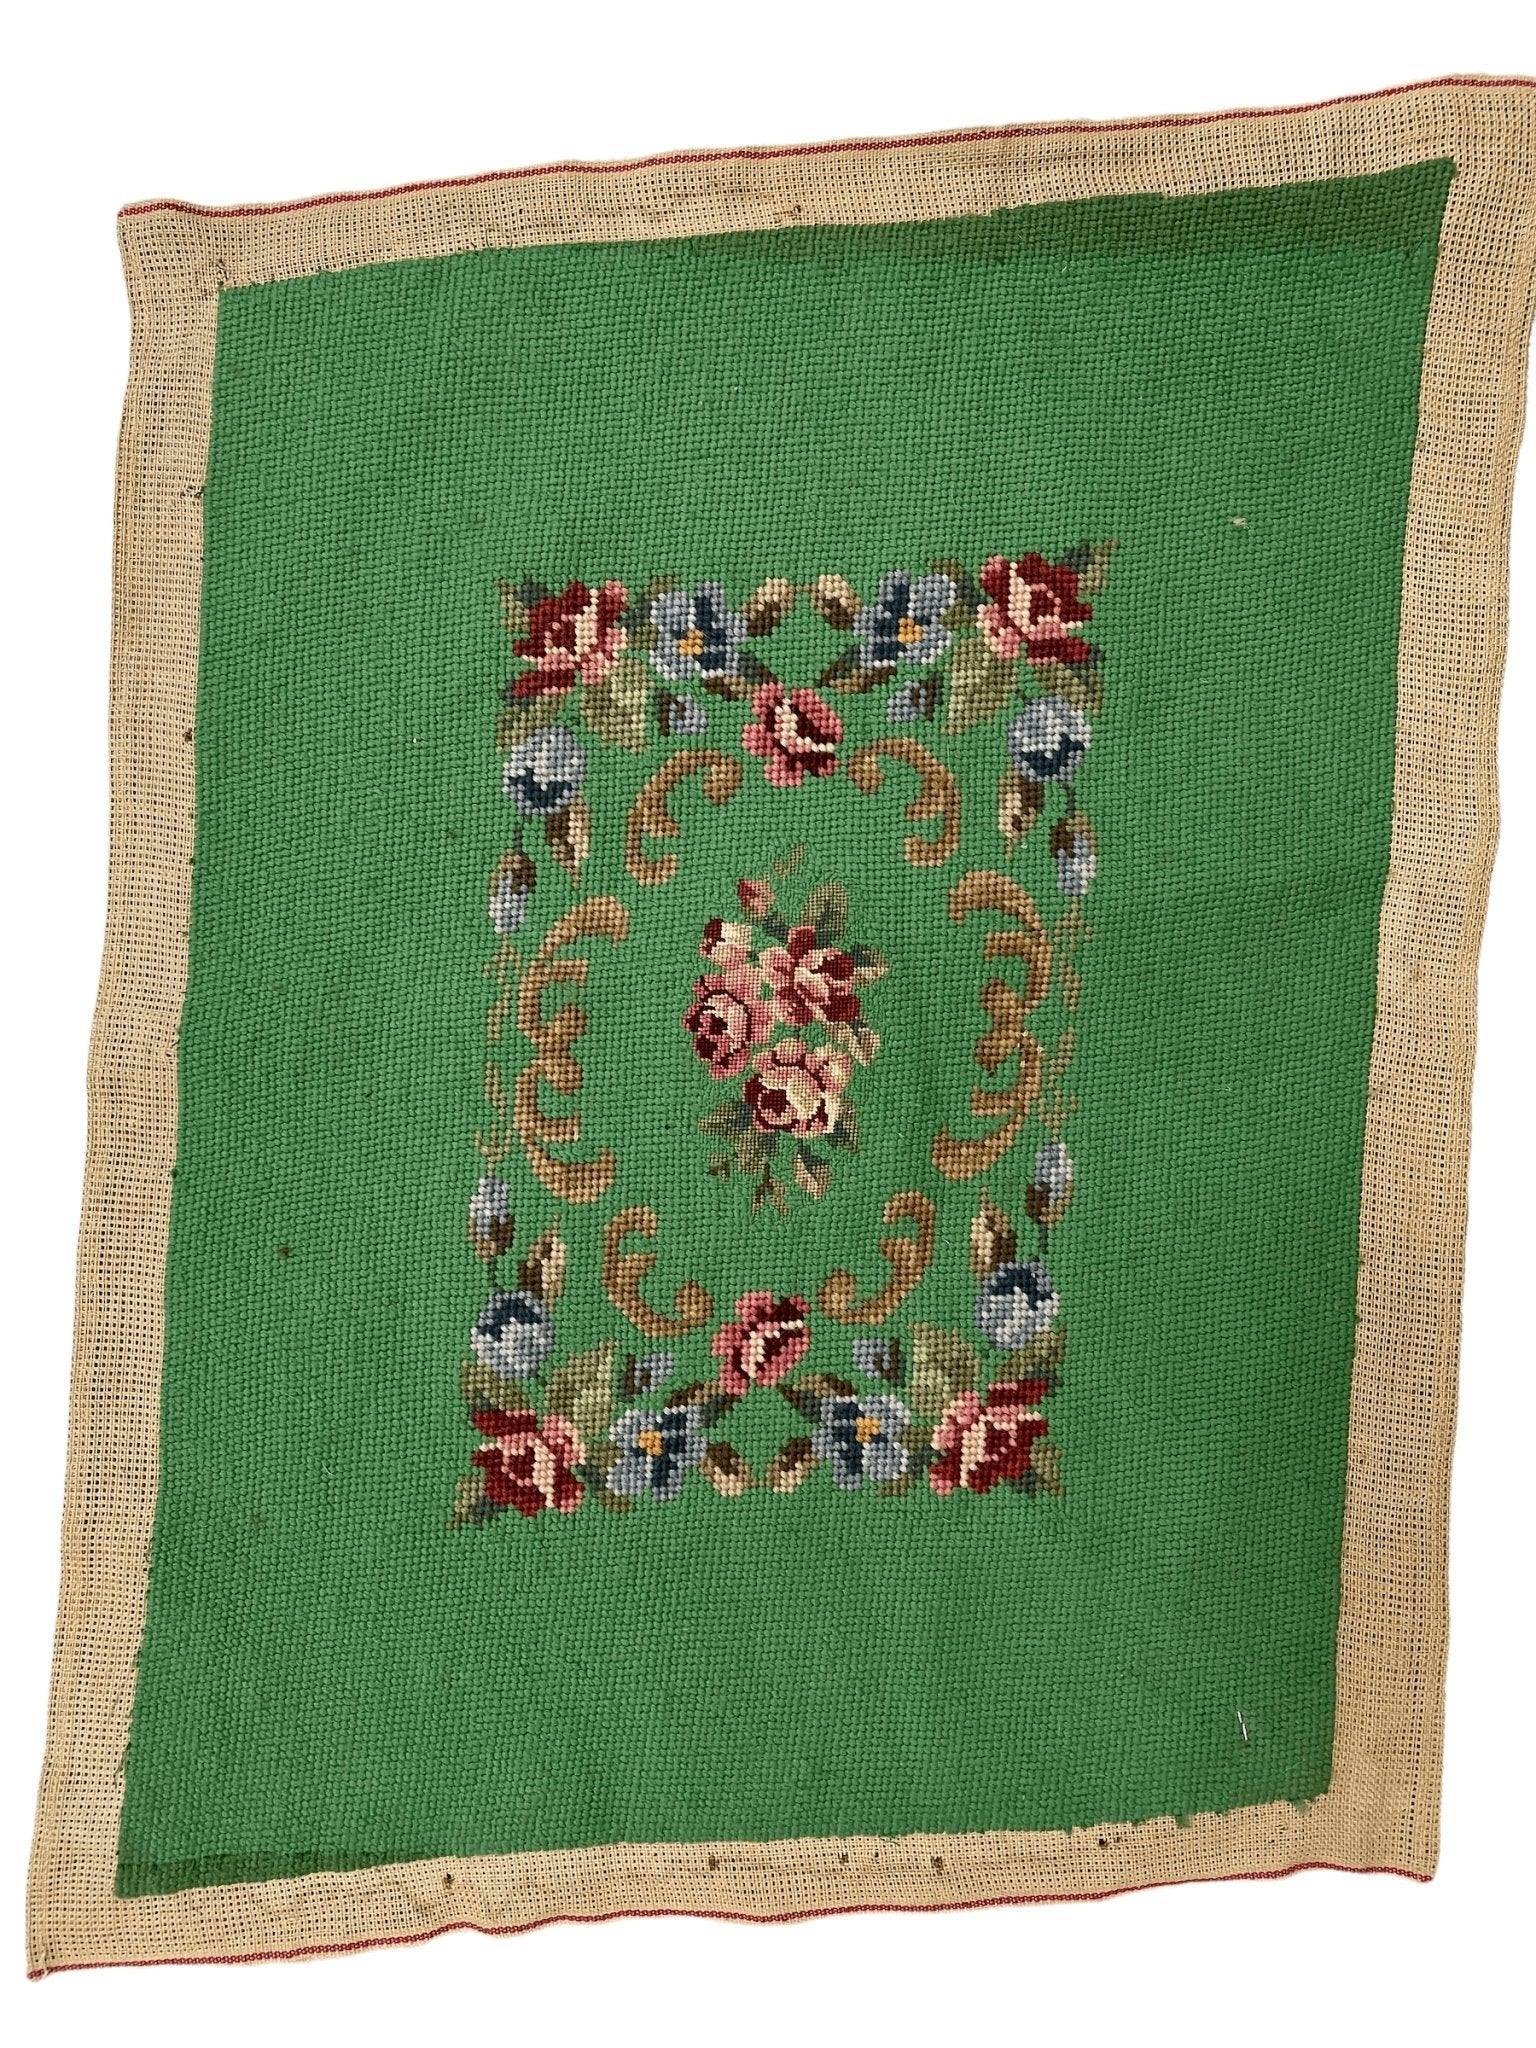 Vintage France / European Tapestry Needlepoint Rug / Mat 1'8''x1'2''